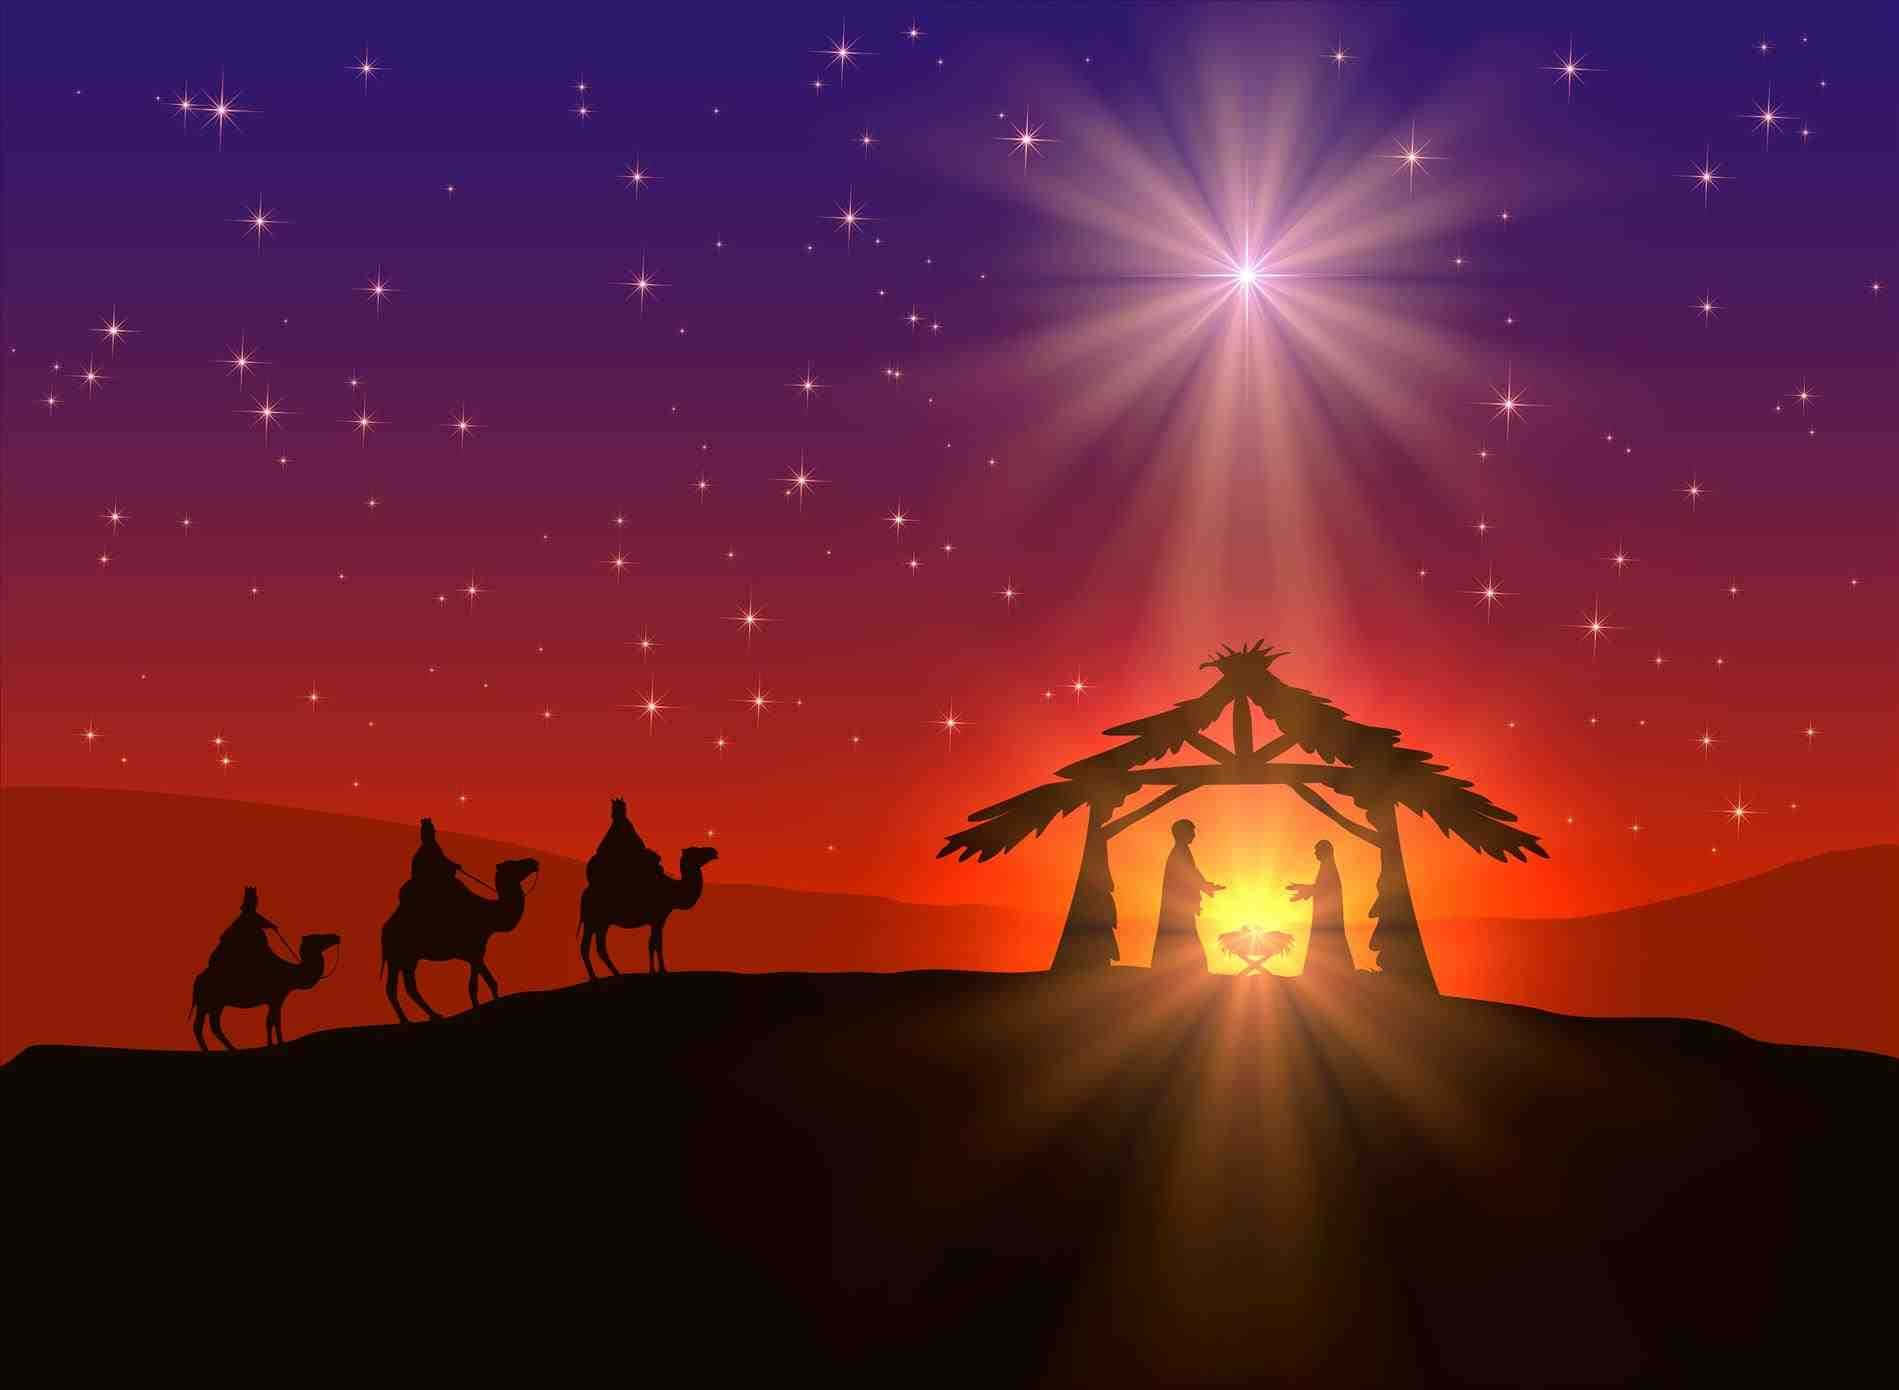 An Illuminated Nativity Scene